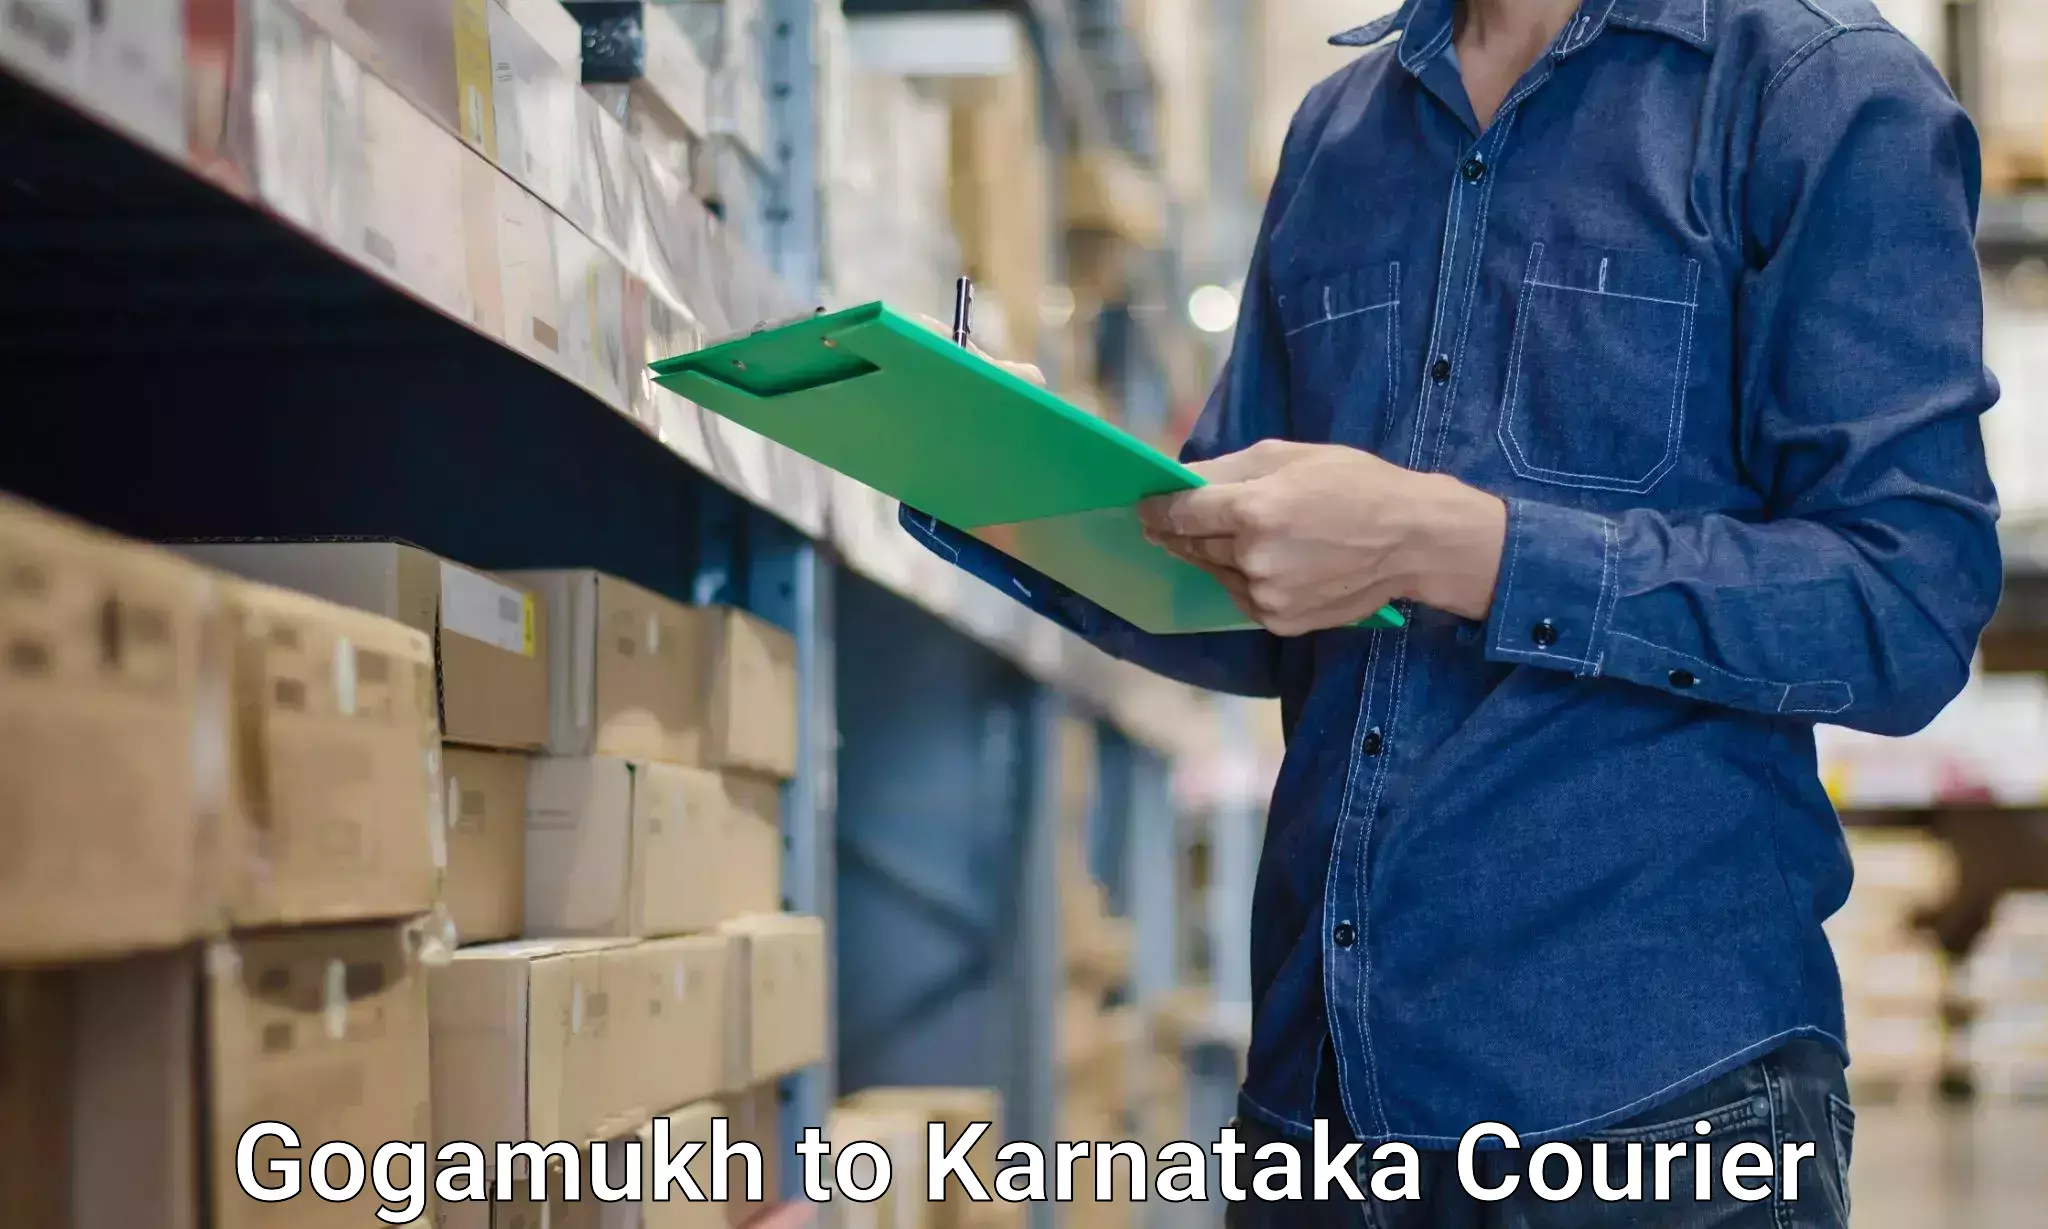 Furniture transport professionals Gogamukh to Karnataka